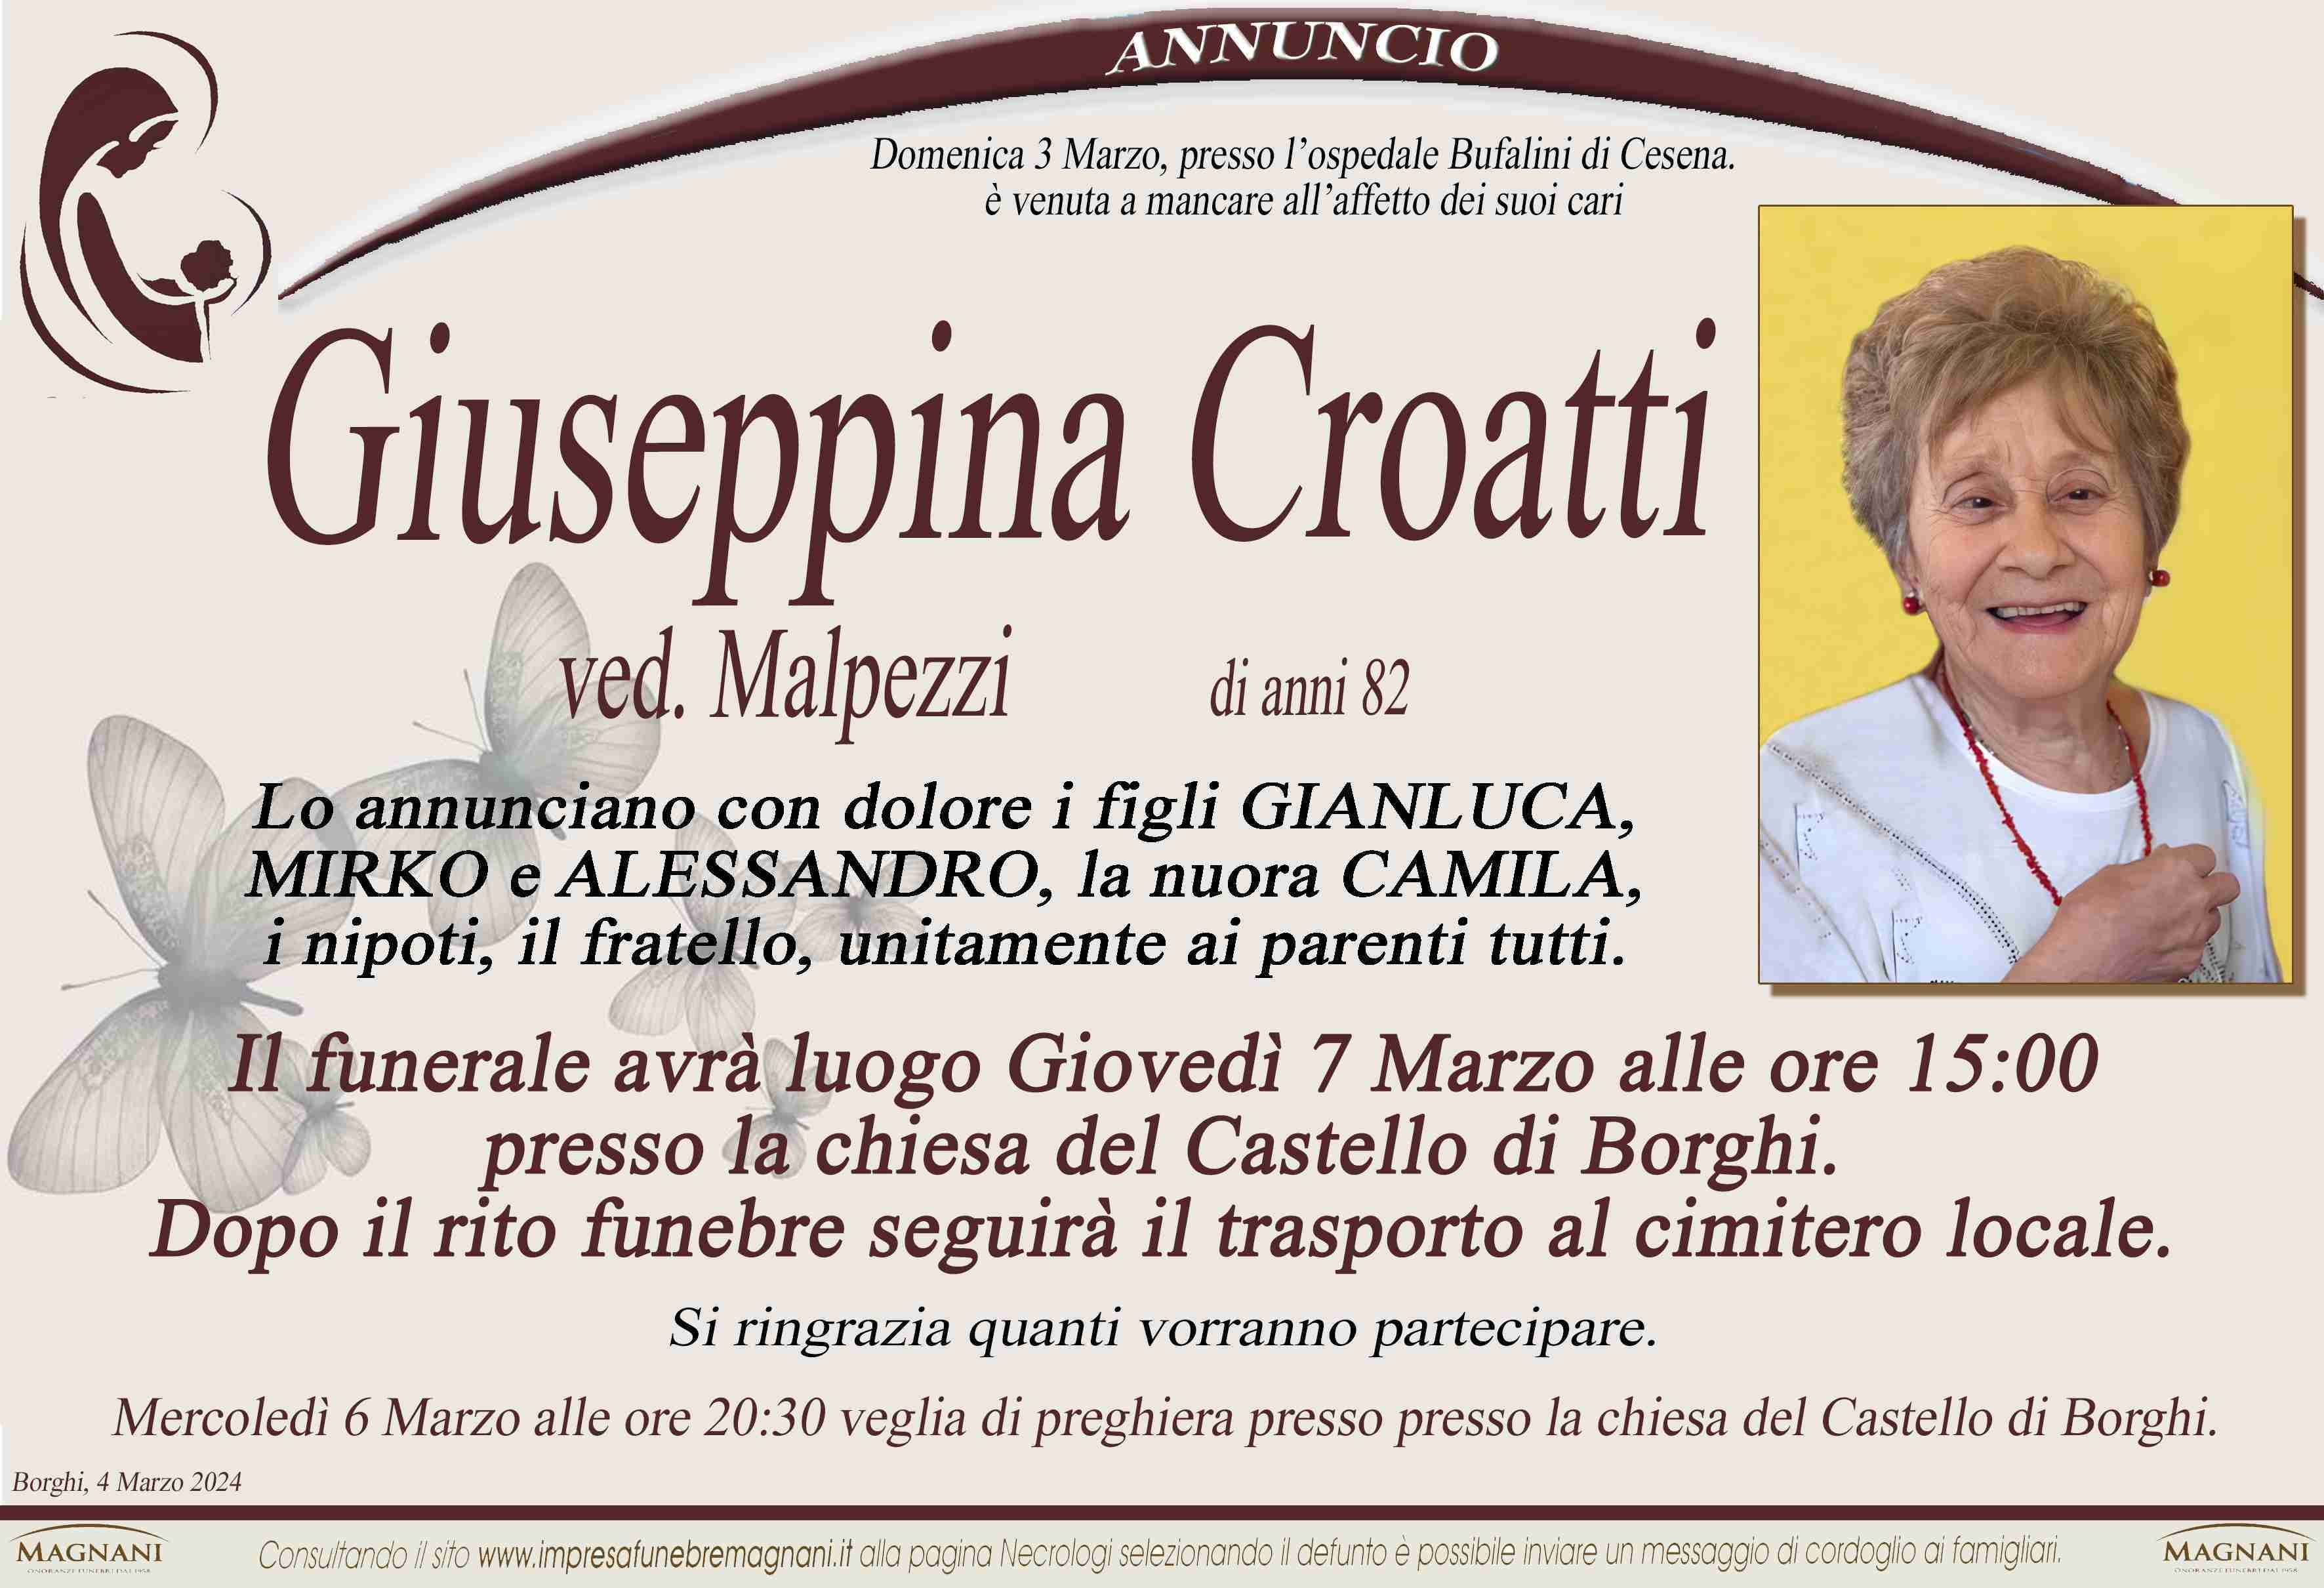 Giuseppina Croatti